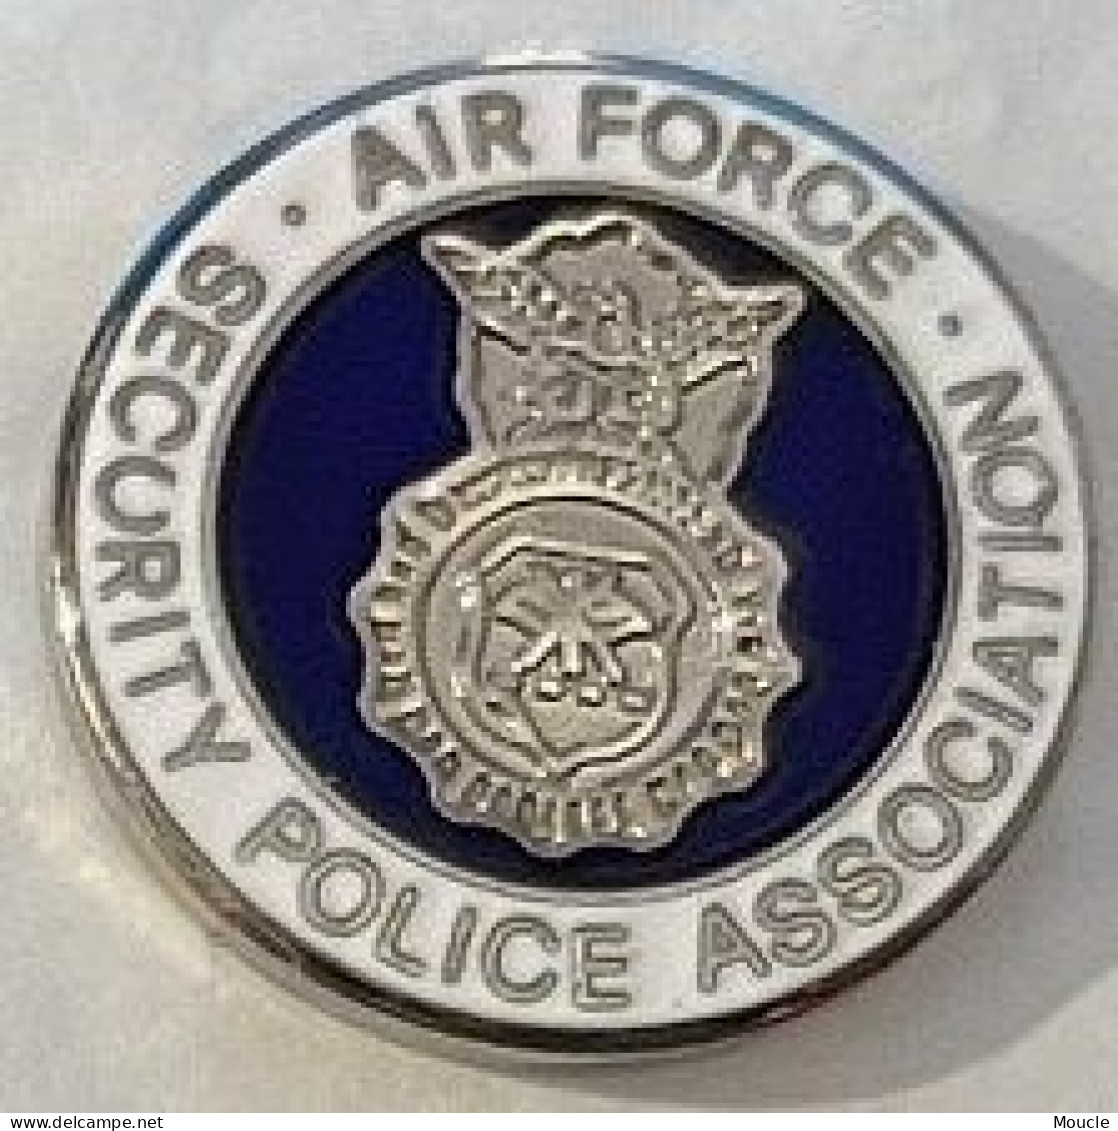 AIR FORCE - SECURITY POLICE ASSOCIATION - BADGE - POLIZEI - POLICIA -         (ROUGE) - Polizia